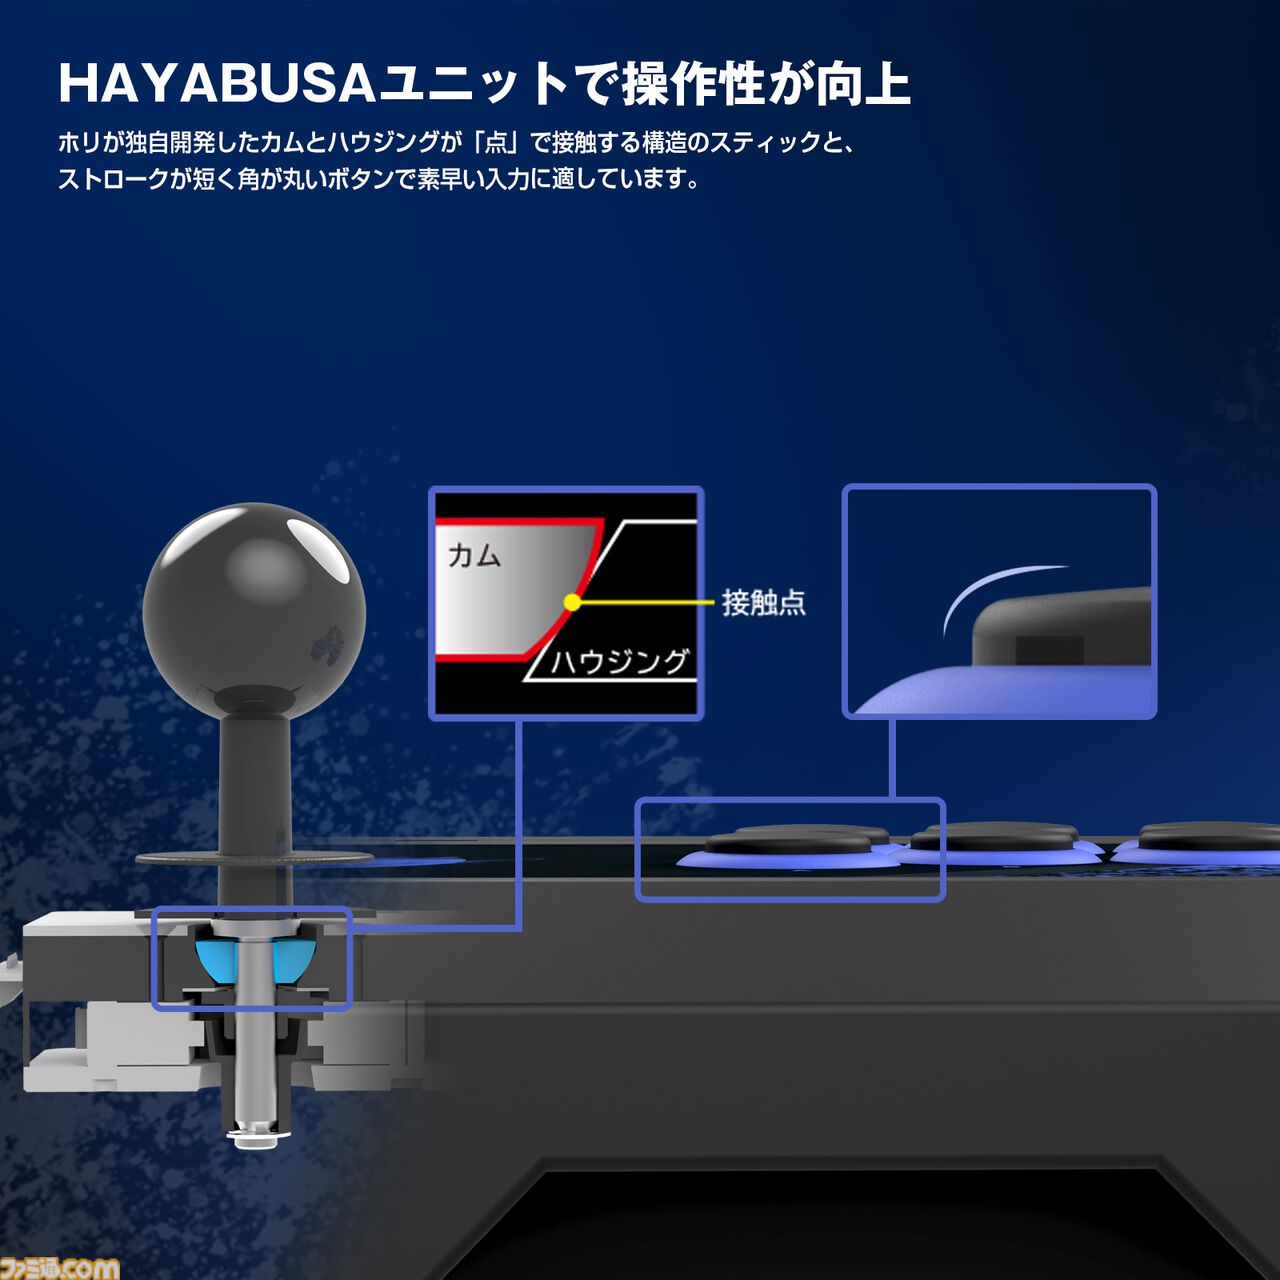 【HORI】“Pro.V HAYABUSA for Windows PC”と“ファイティングスティック mini for Windows PC”が7月に発売